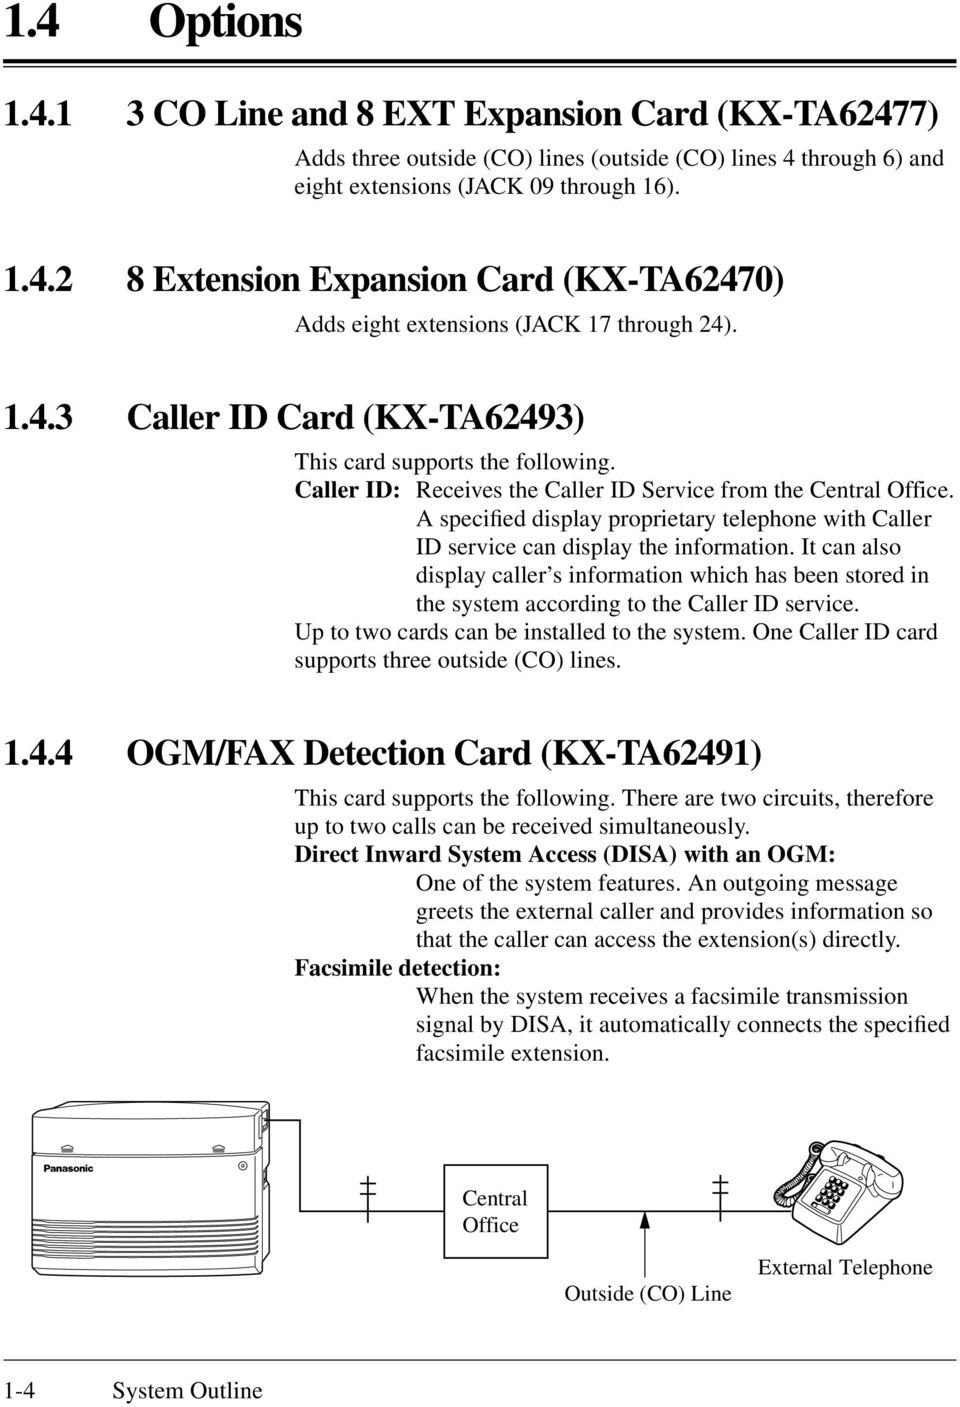 Panasonic KX-TA62477 Card 3 co's 8 Extension Analog Expansion Card 